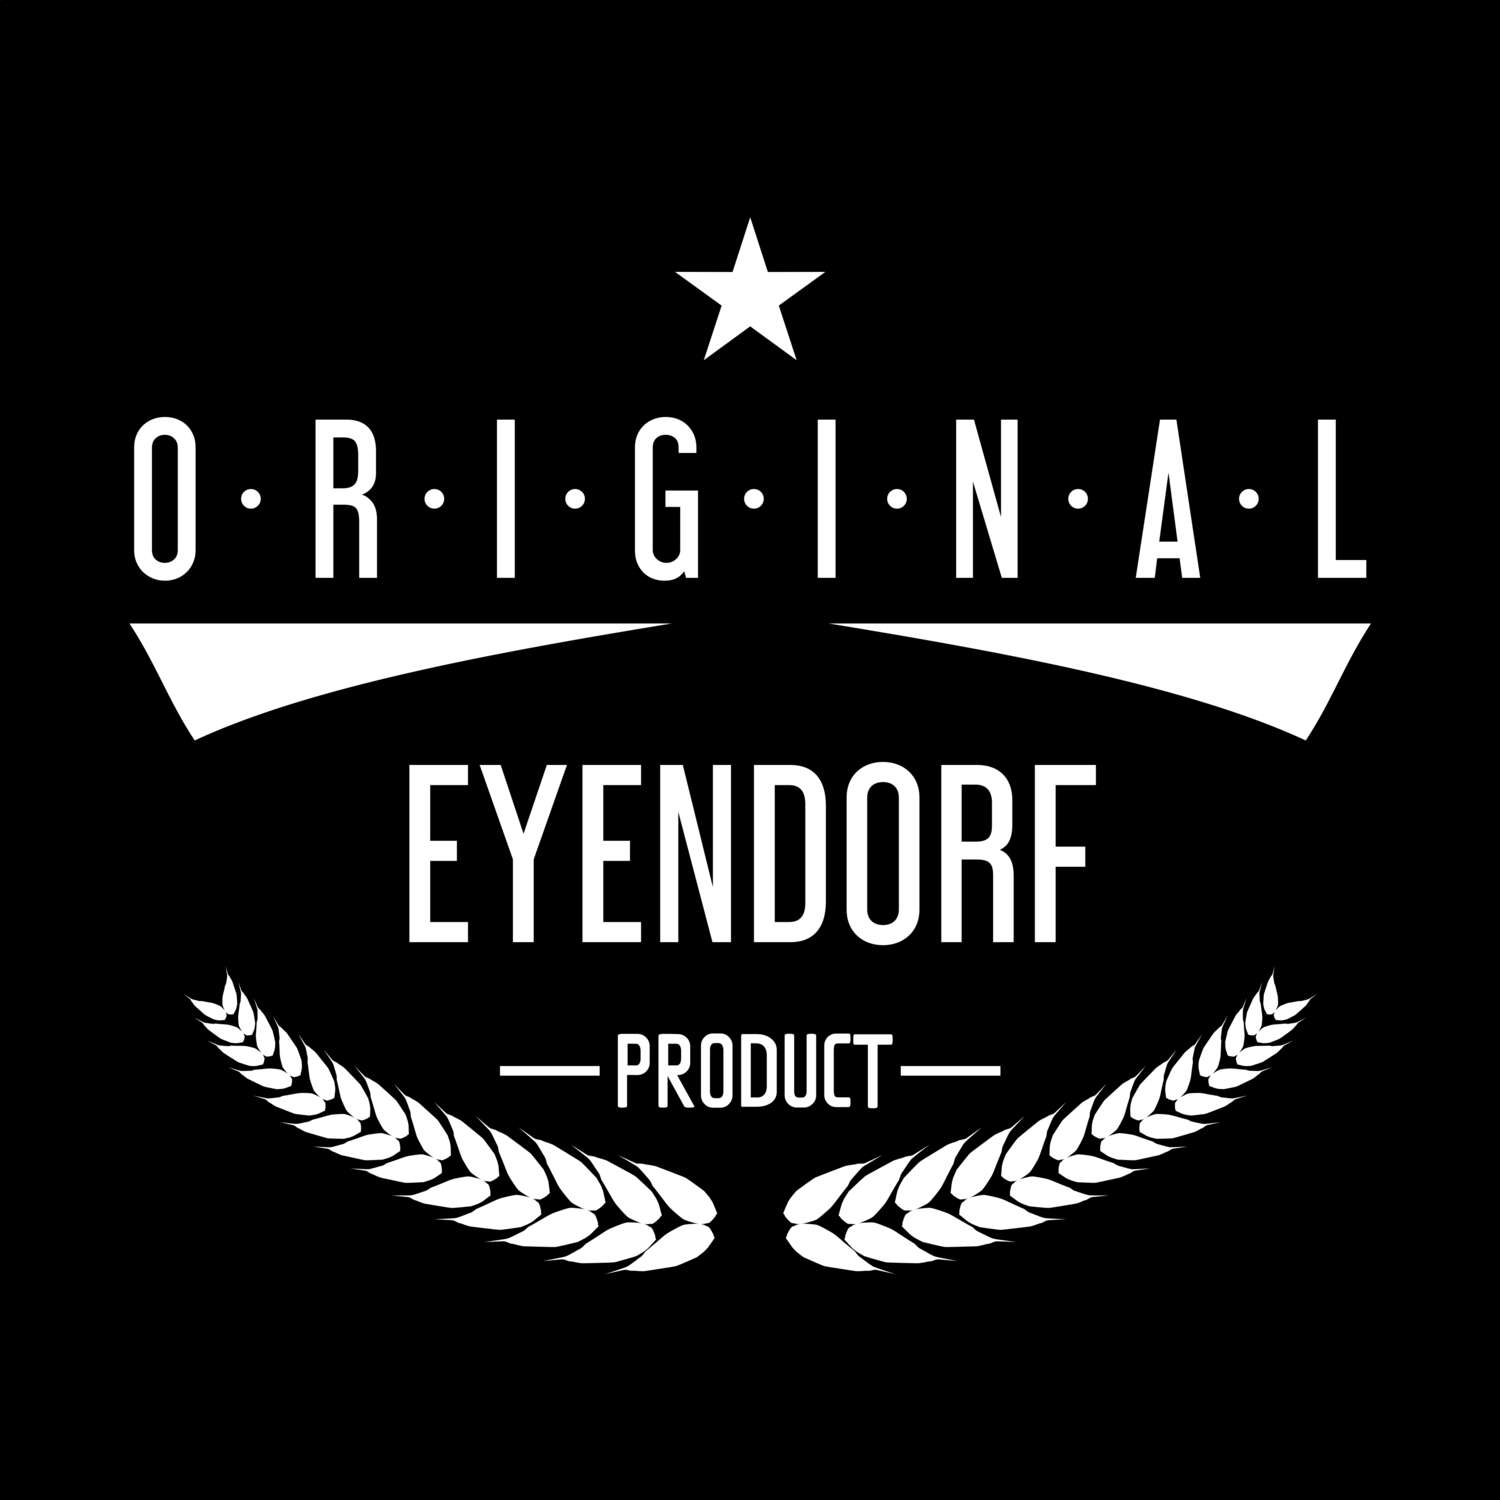 Eyendorf T-Shirt »Original Product«